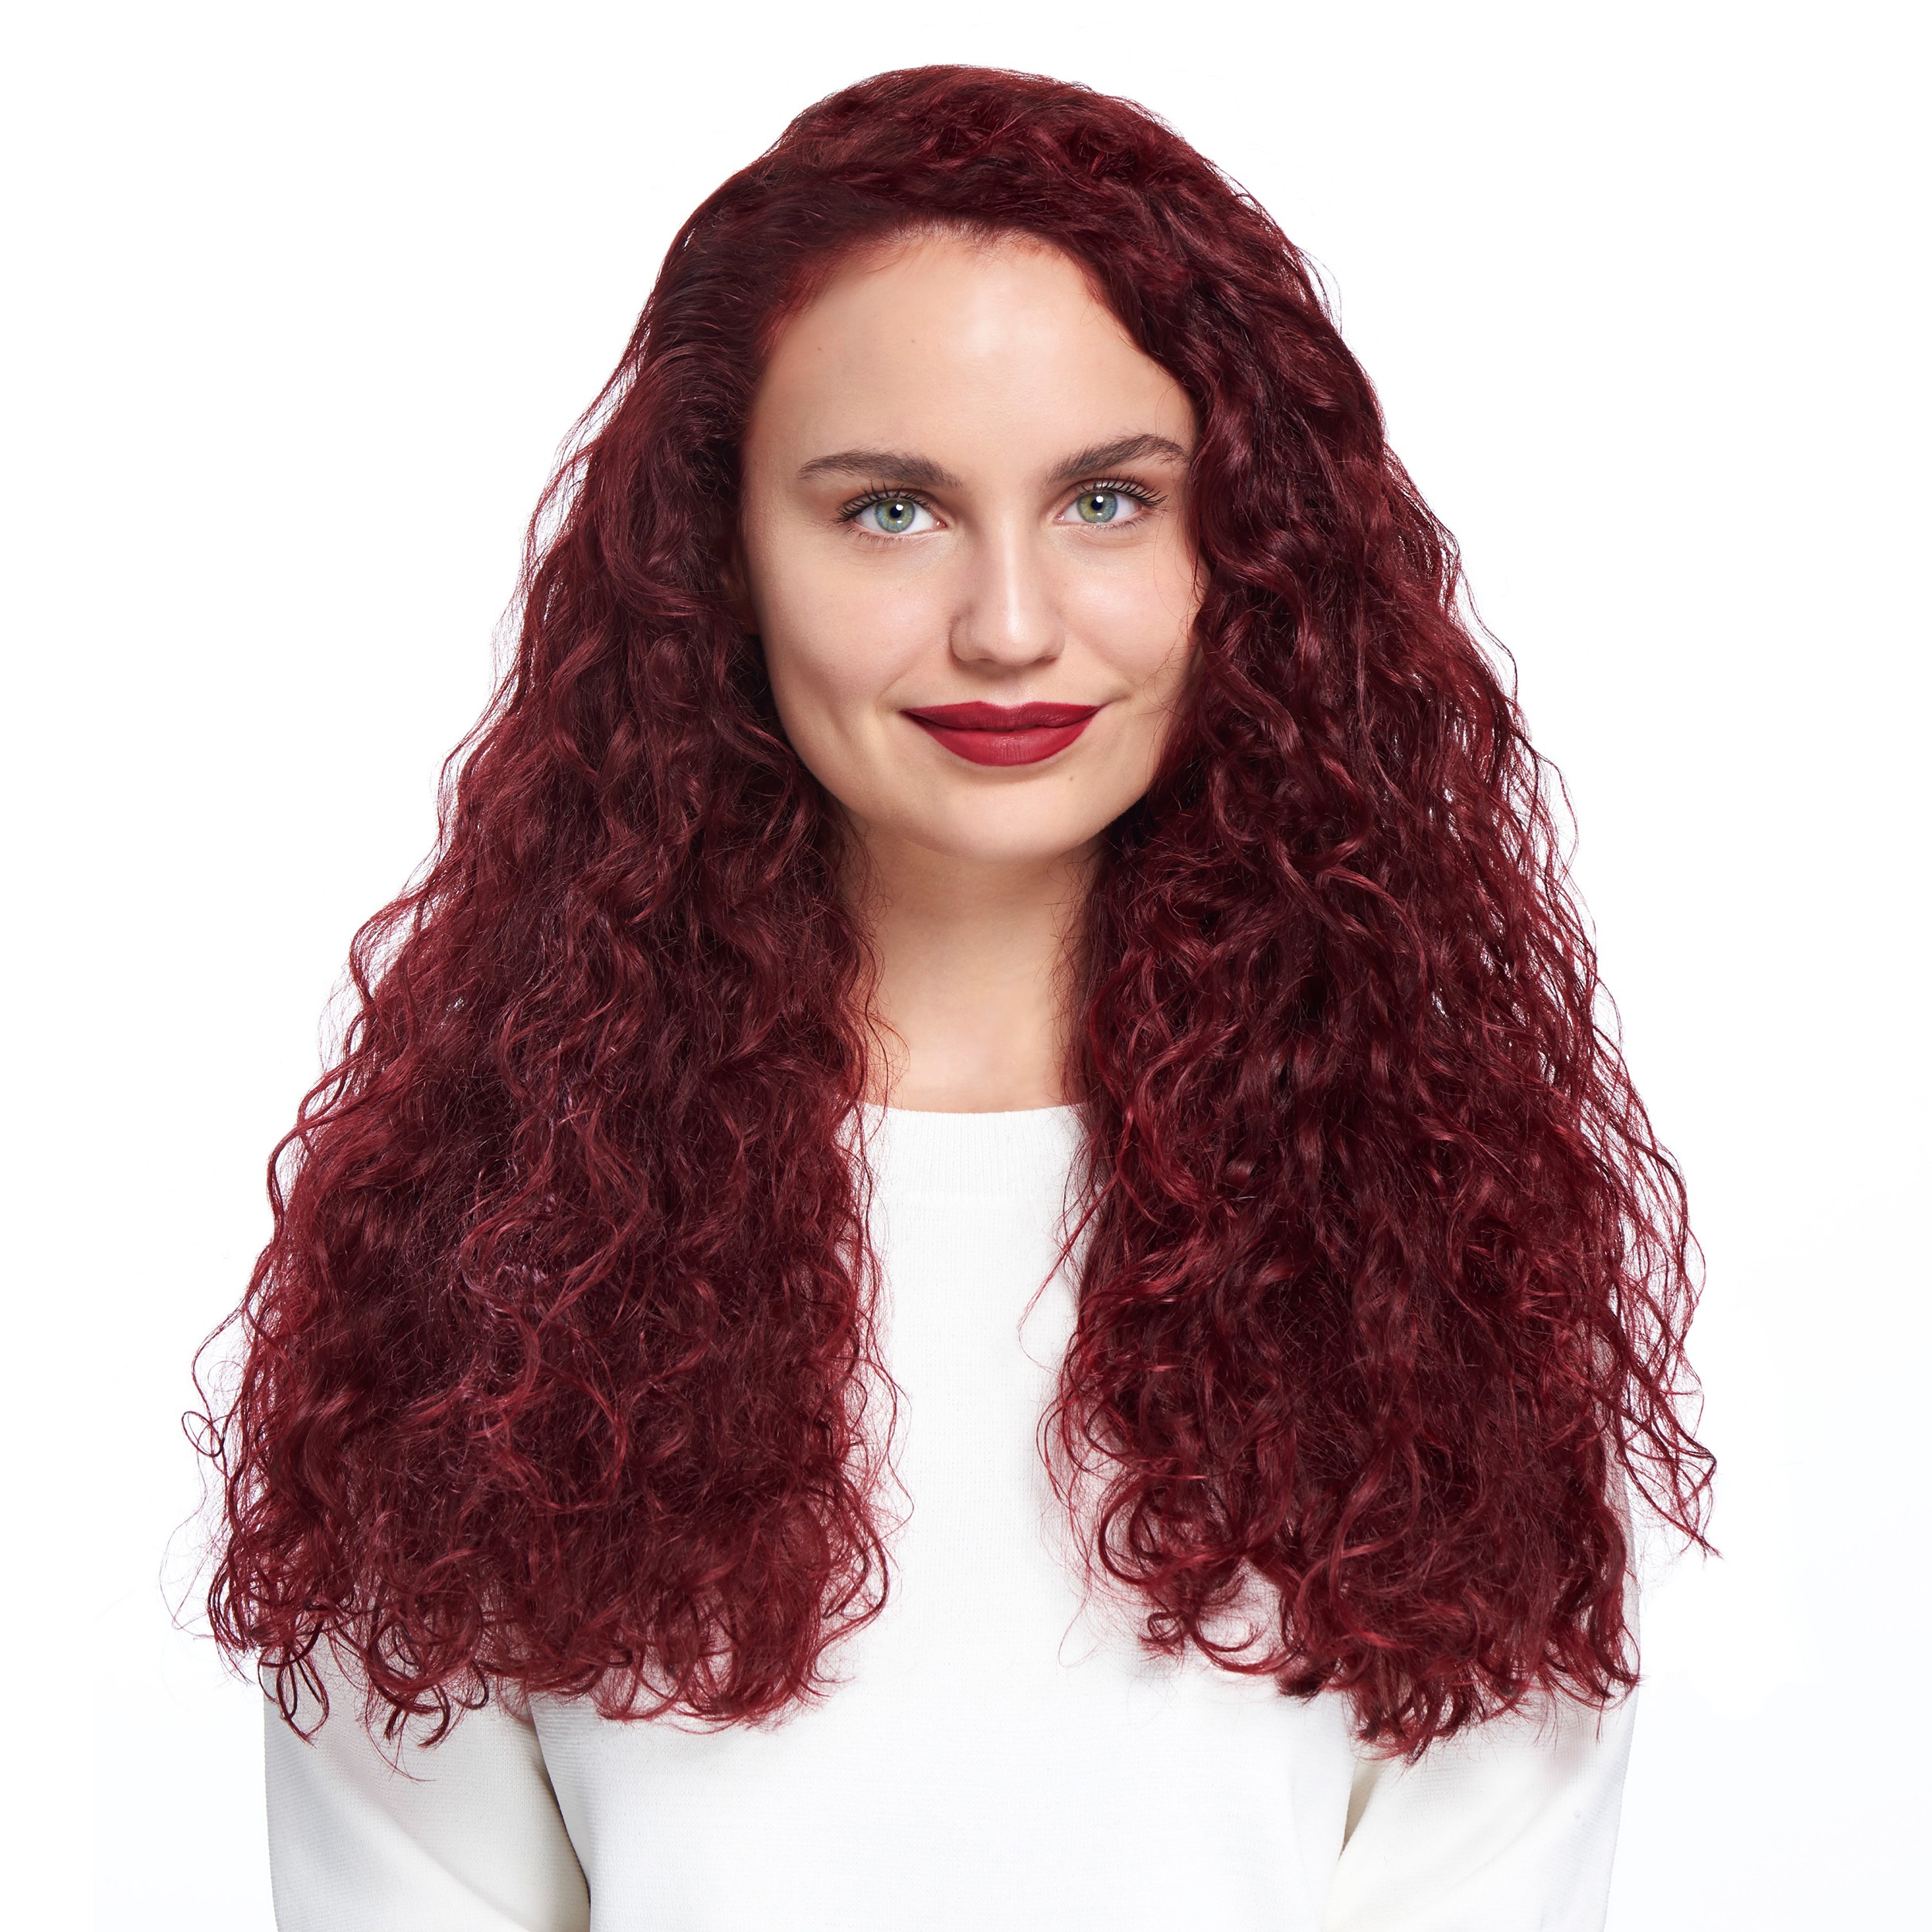 Olia - Dauerhafte Haarfarbe